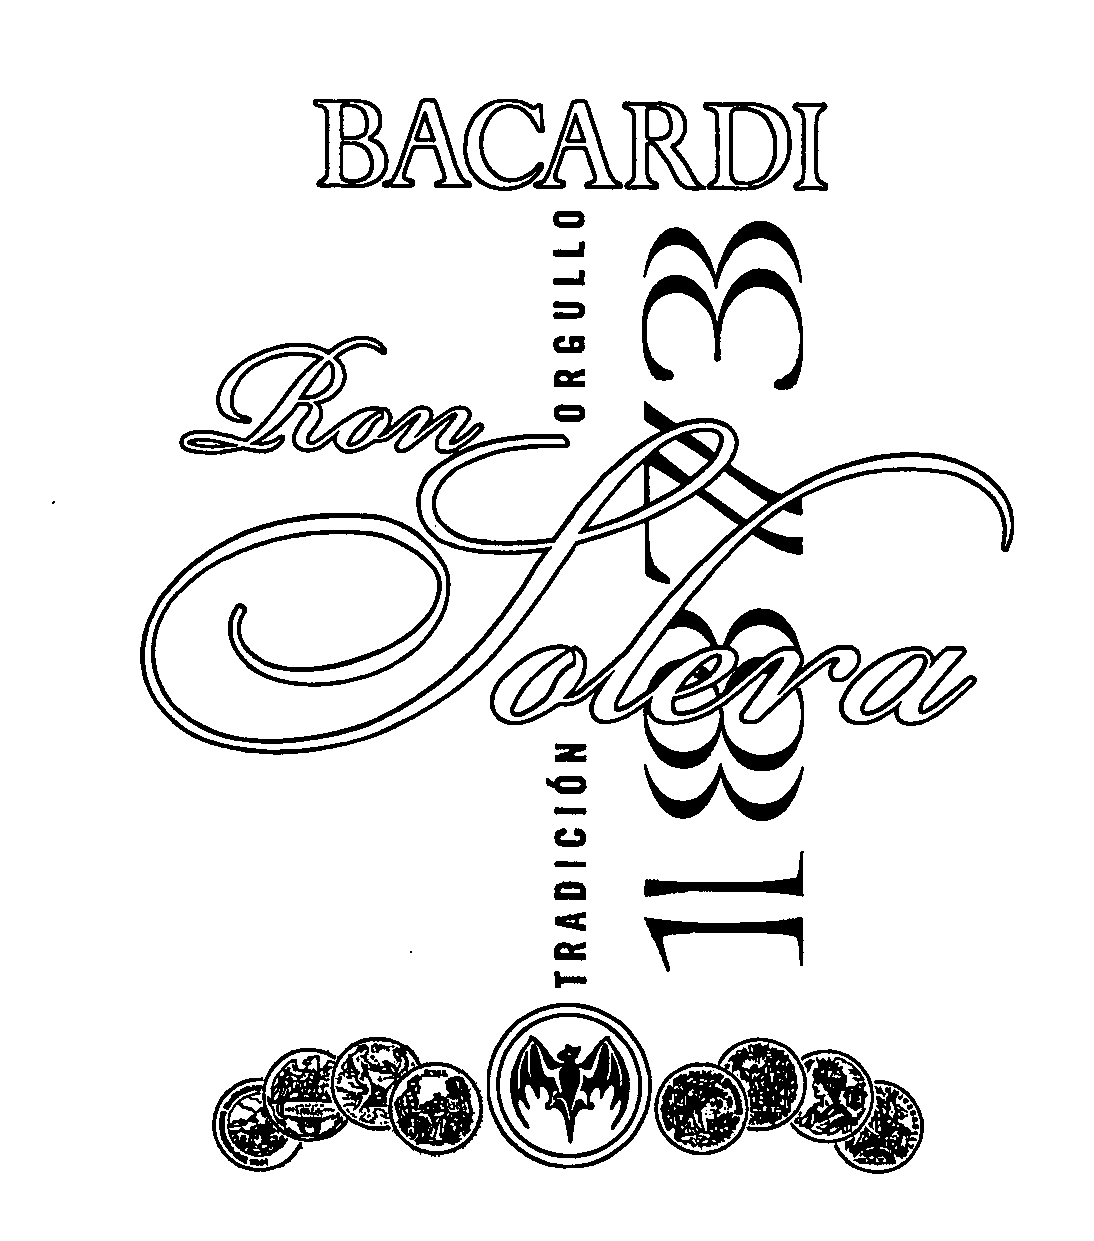 Trademark Logo BACARDI RON SOLERA 1873 TRADICION ORGULLO